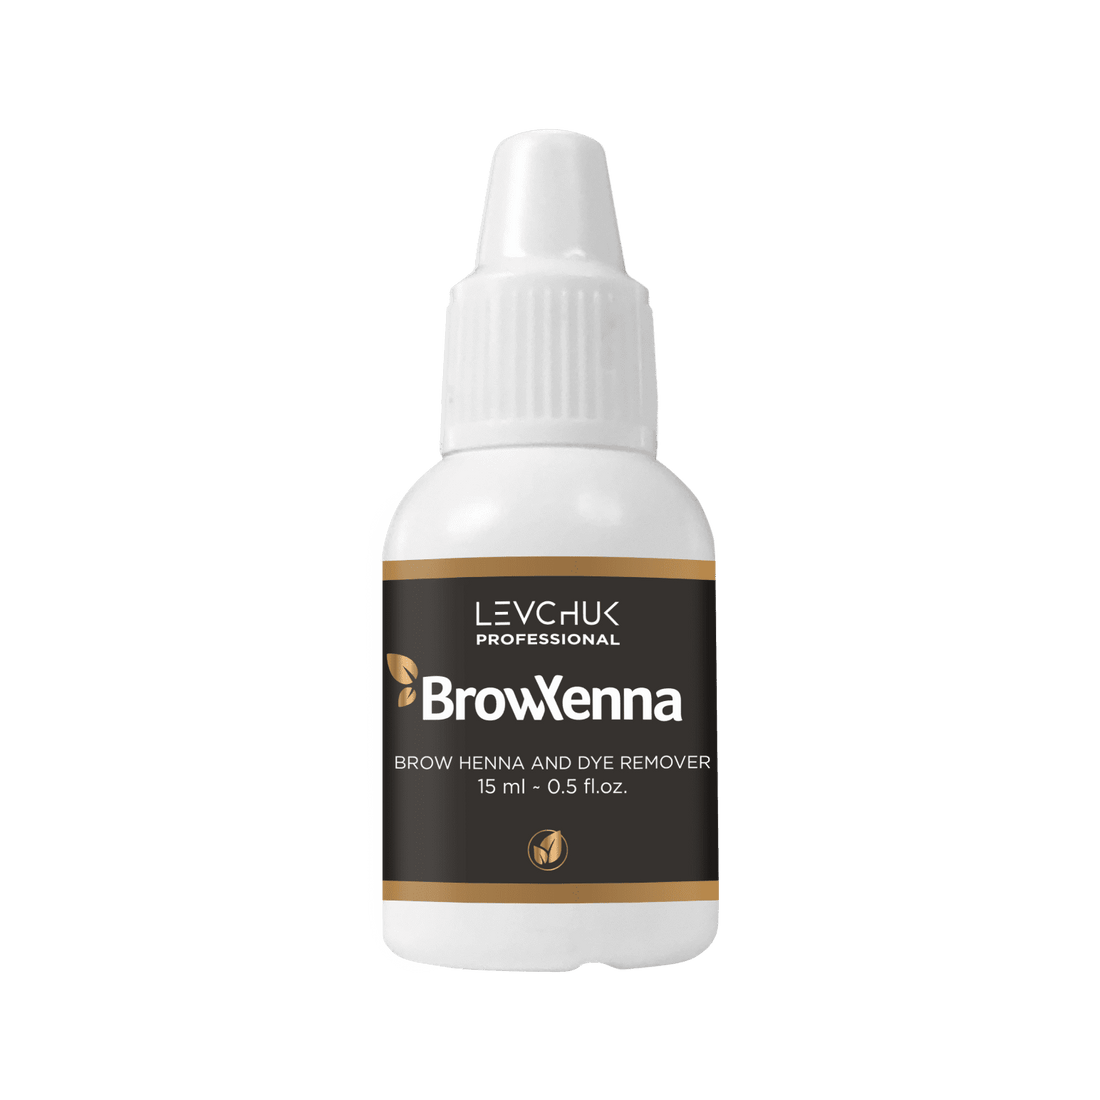 BROW XENNA - Henna and dye remover, 15ml